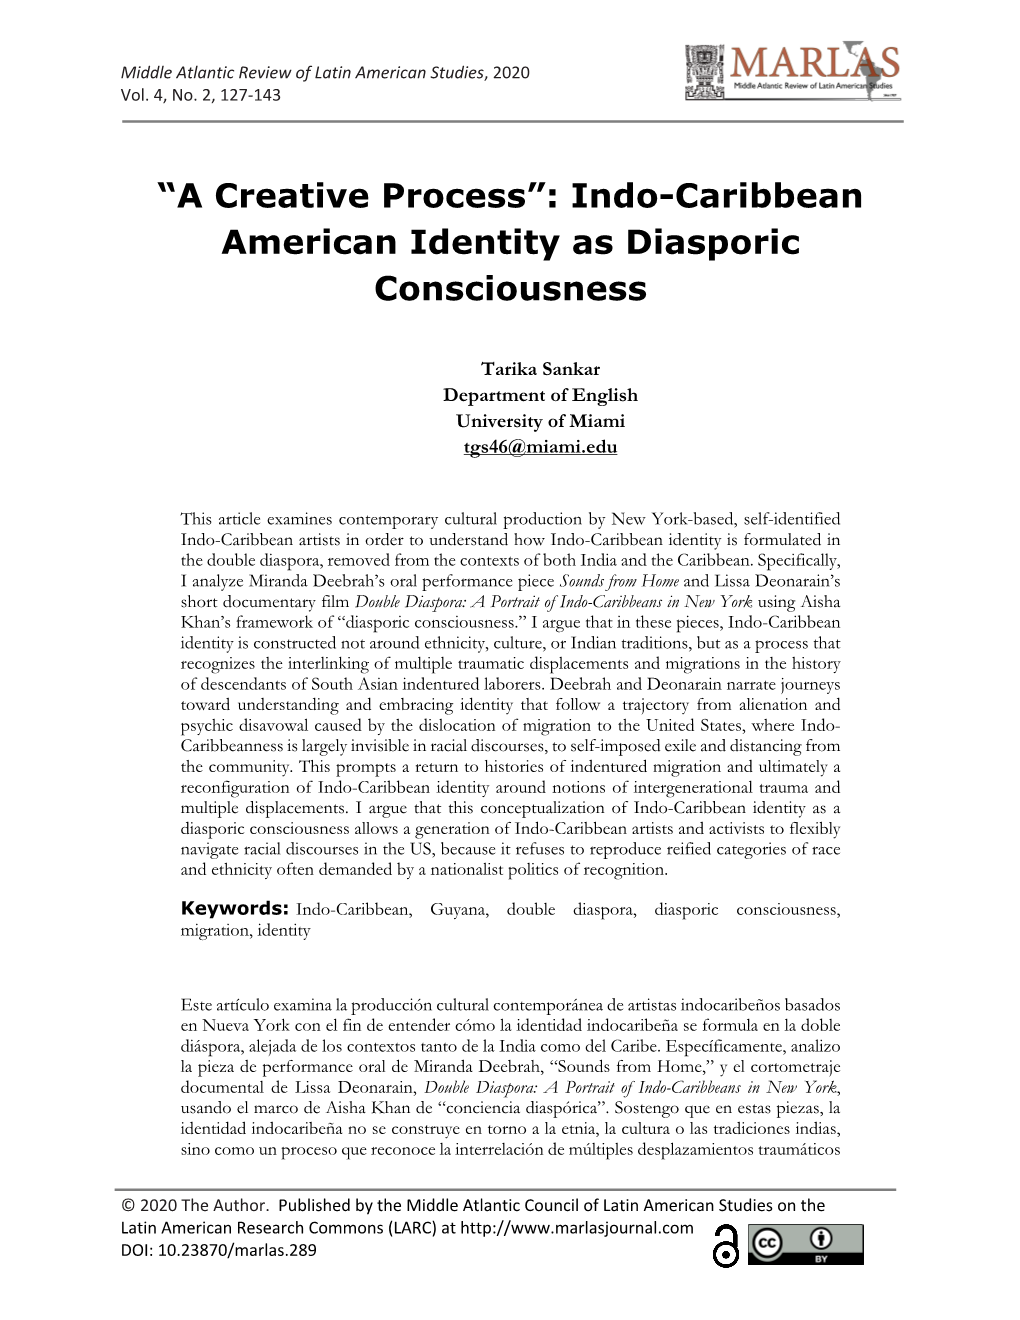 Indo-Caribbean American Identity As Diasporic Consciousness